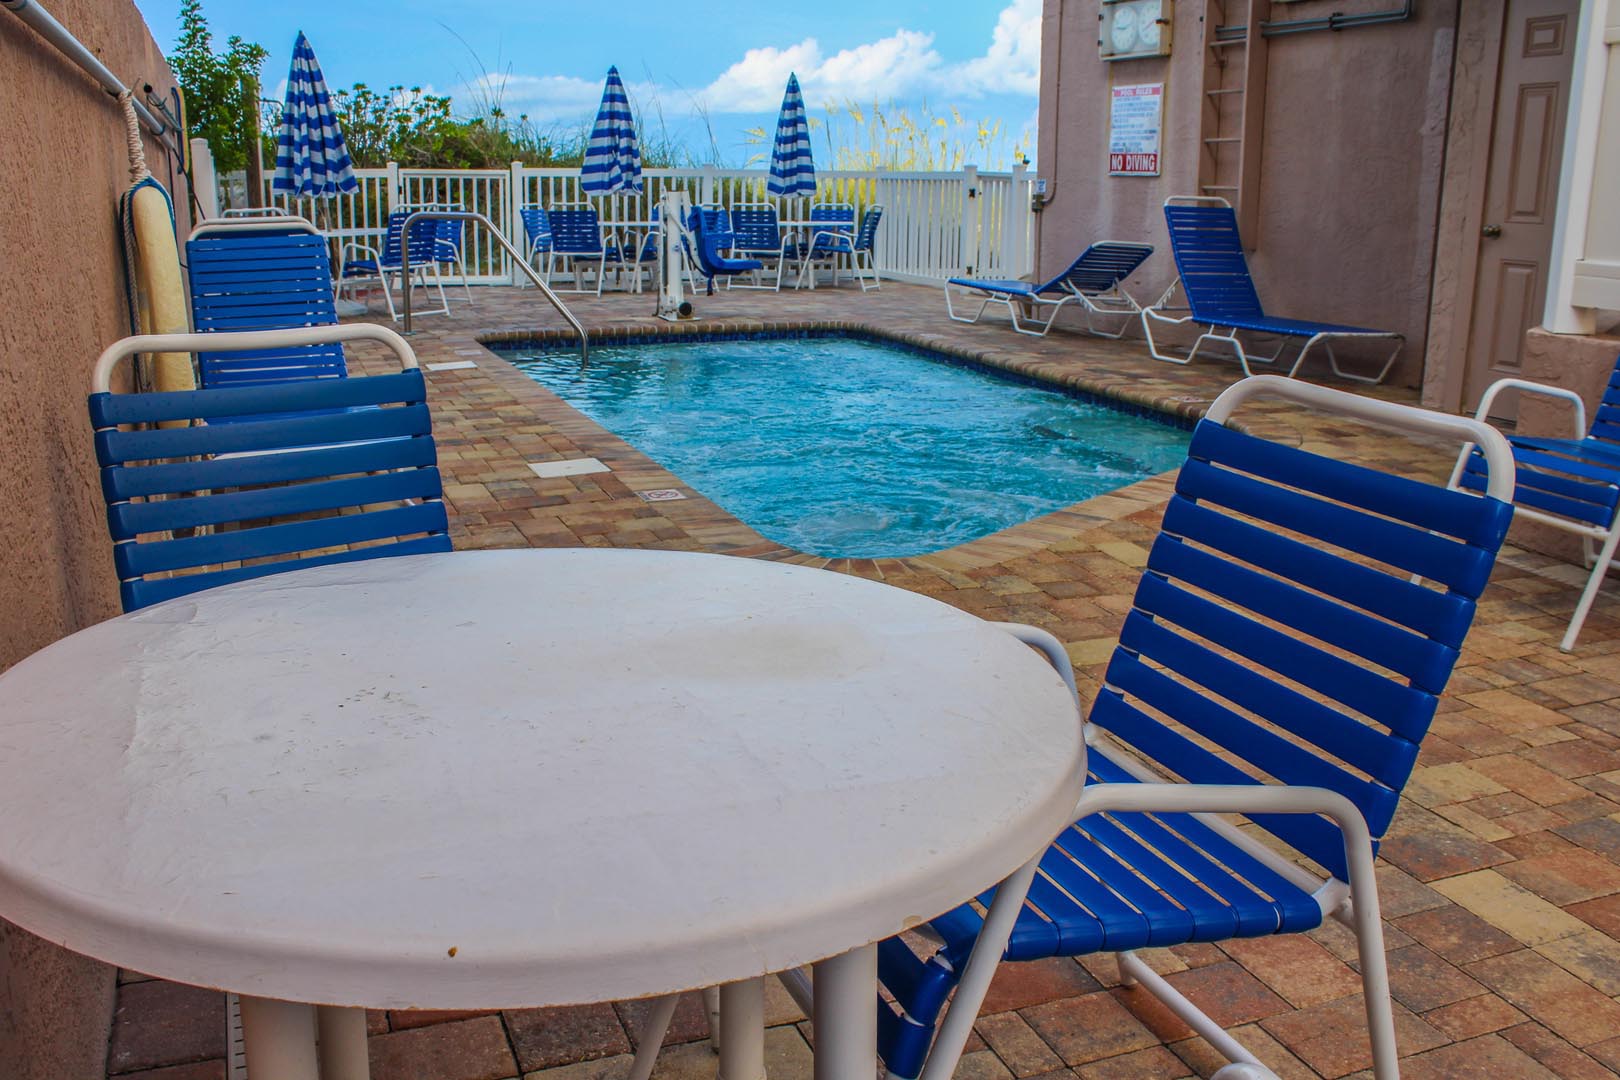 The outdoor swimming pool at VRI's Island Gulf Resort in Madeira Beach, Florida.